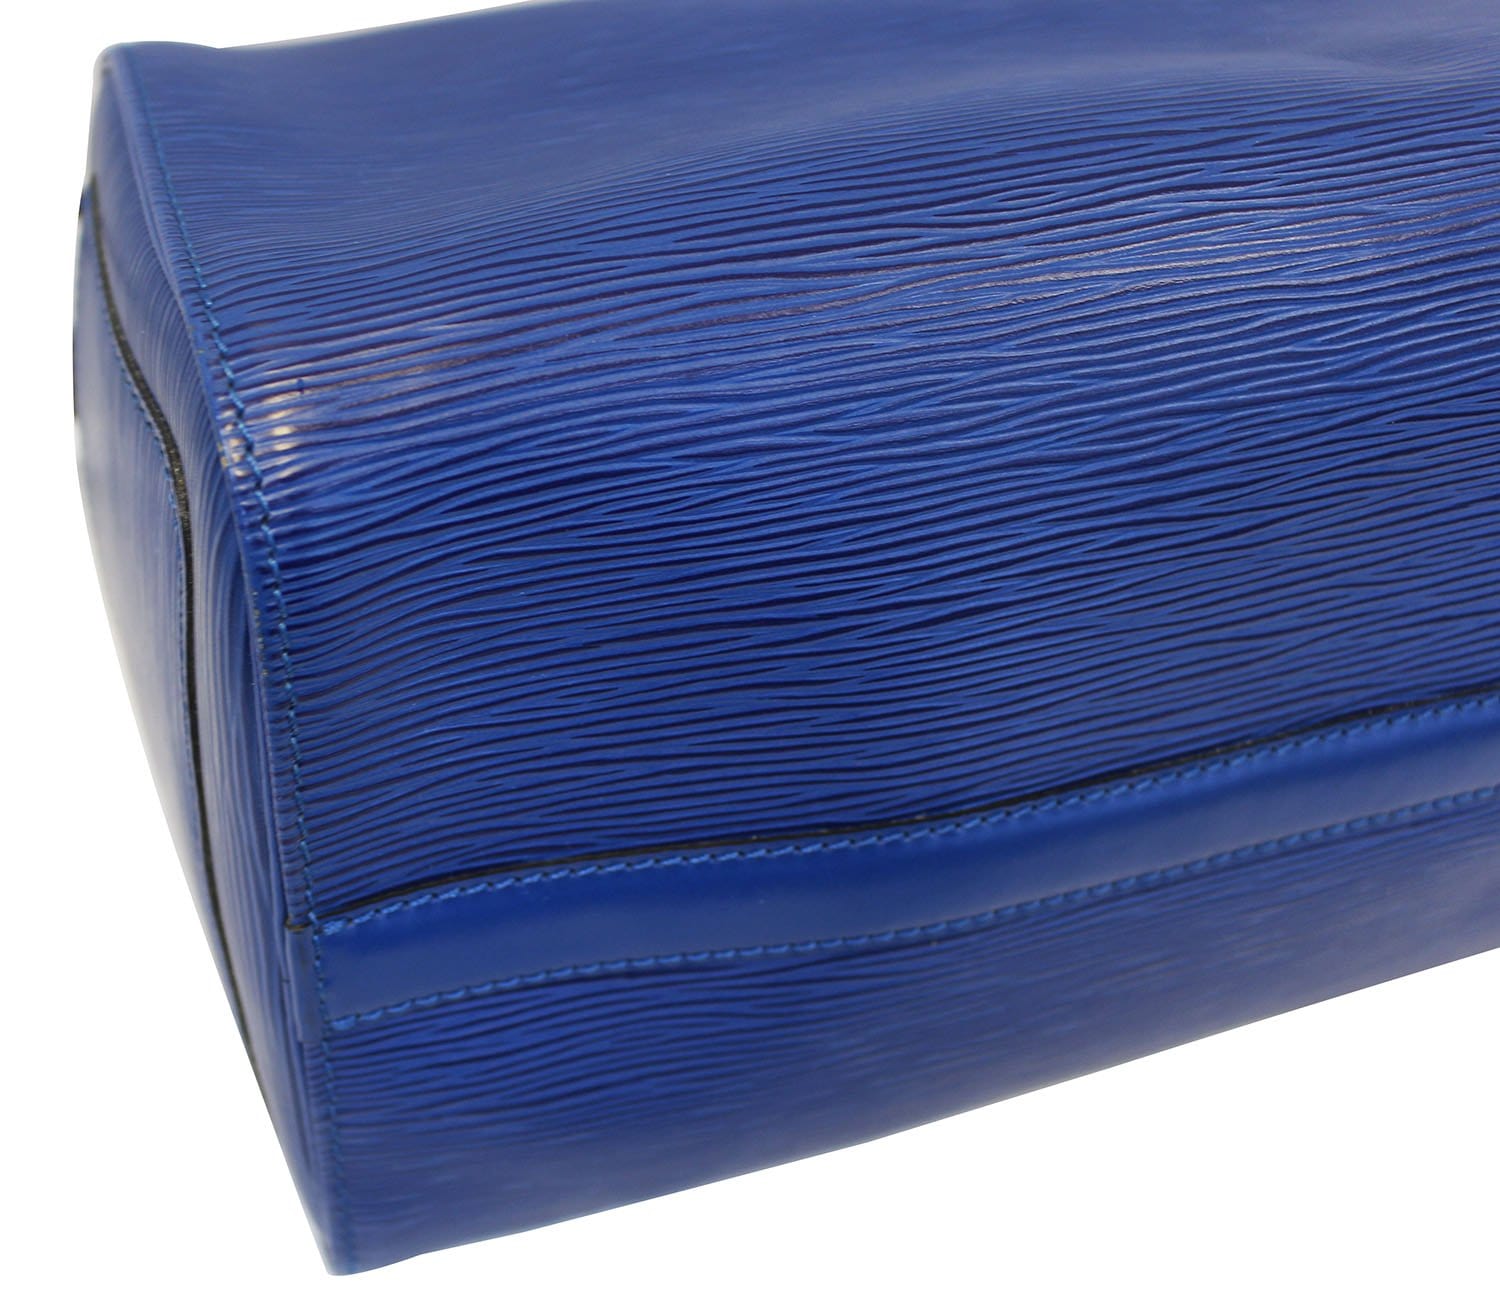 LOUIS VUITTON Pre Owned Epi Leather Blue Speedy 30 Satchel Bag